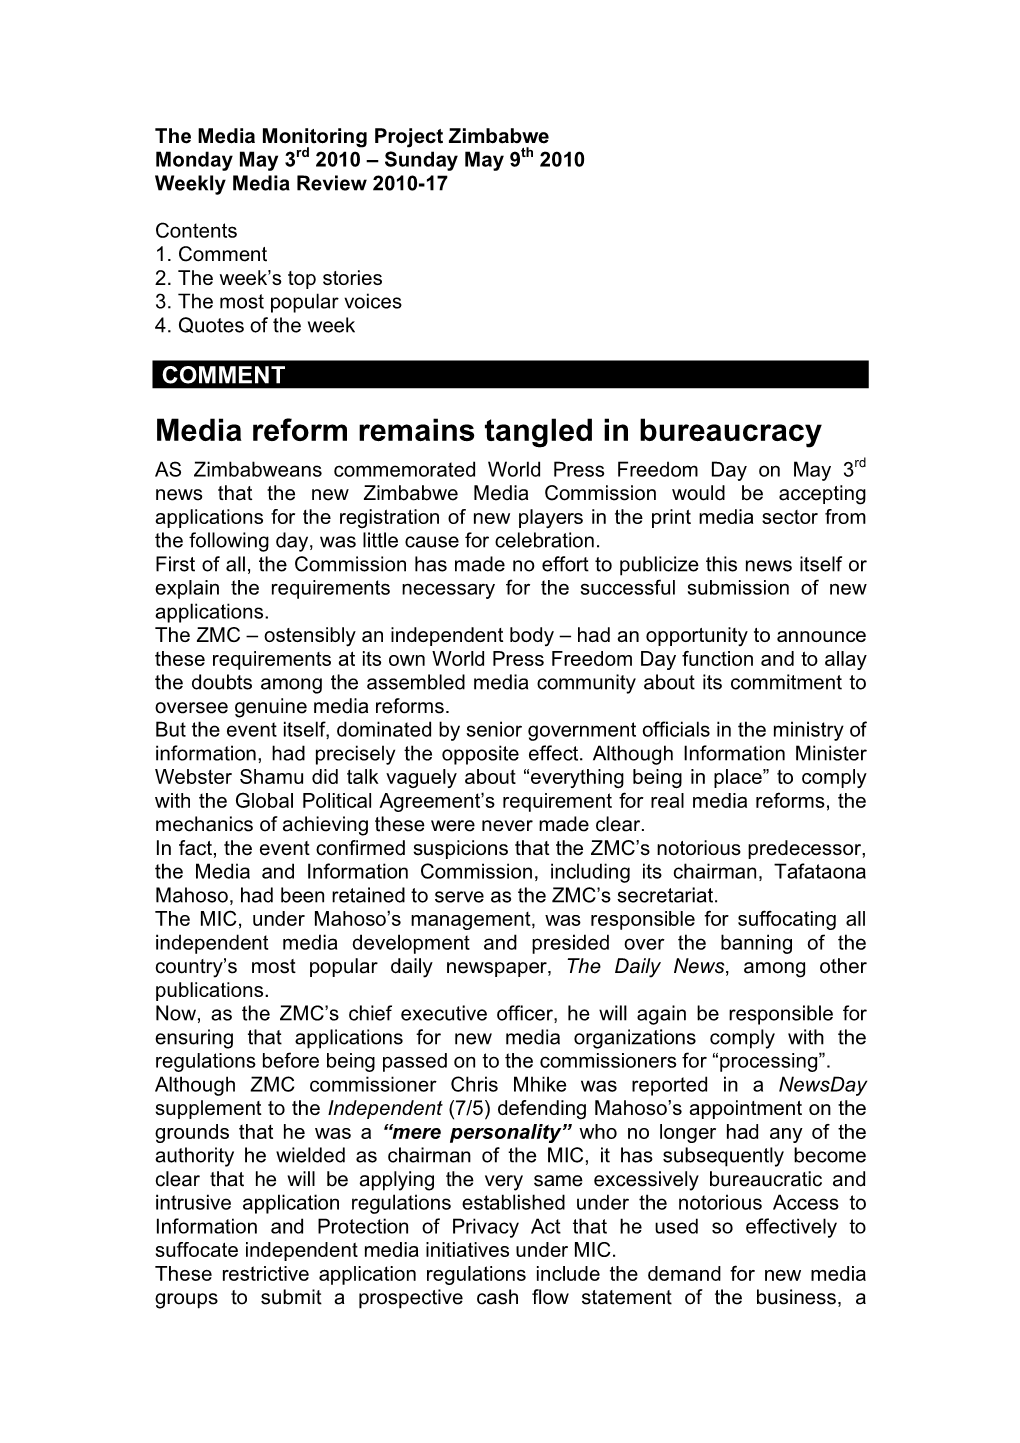 Media Reform Remains Tangled in Bureaucracy